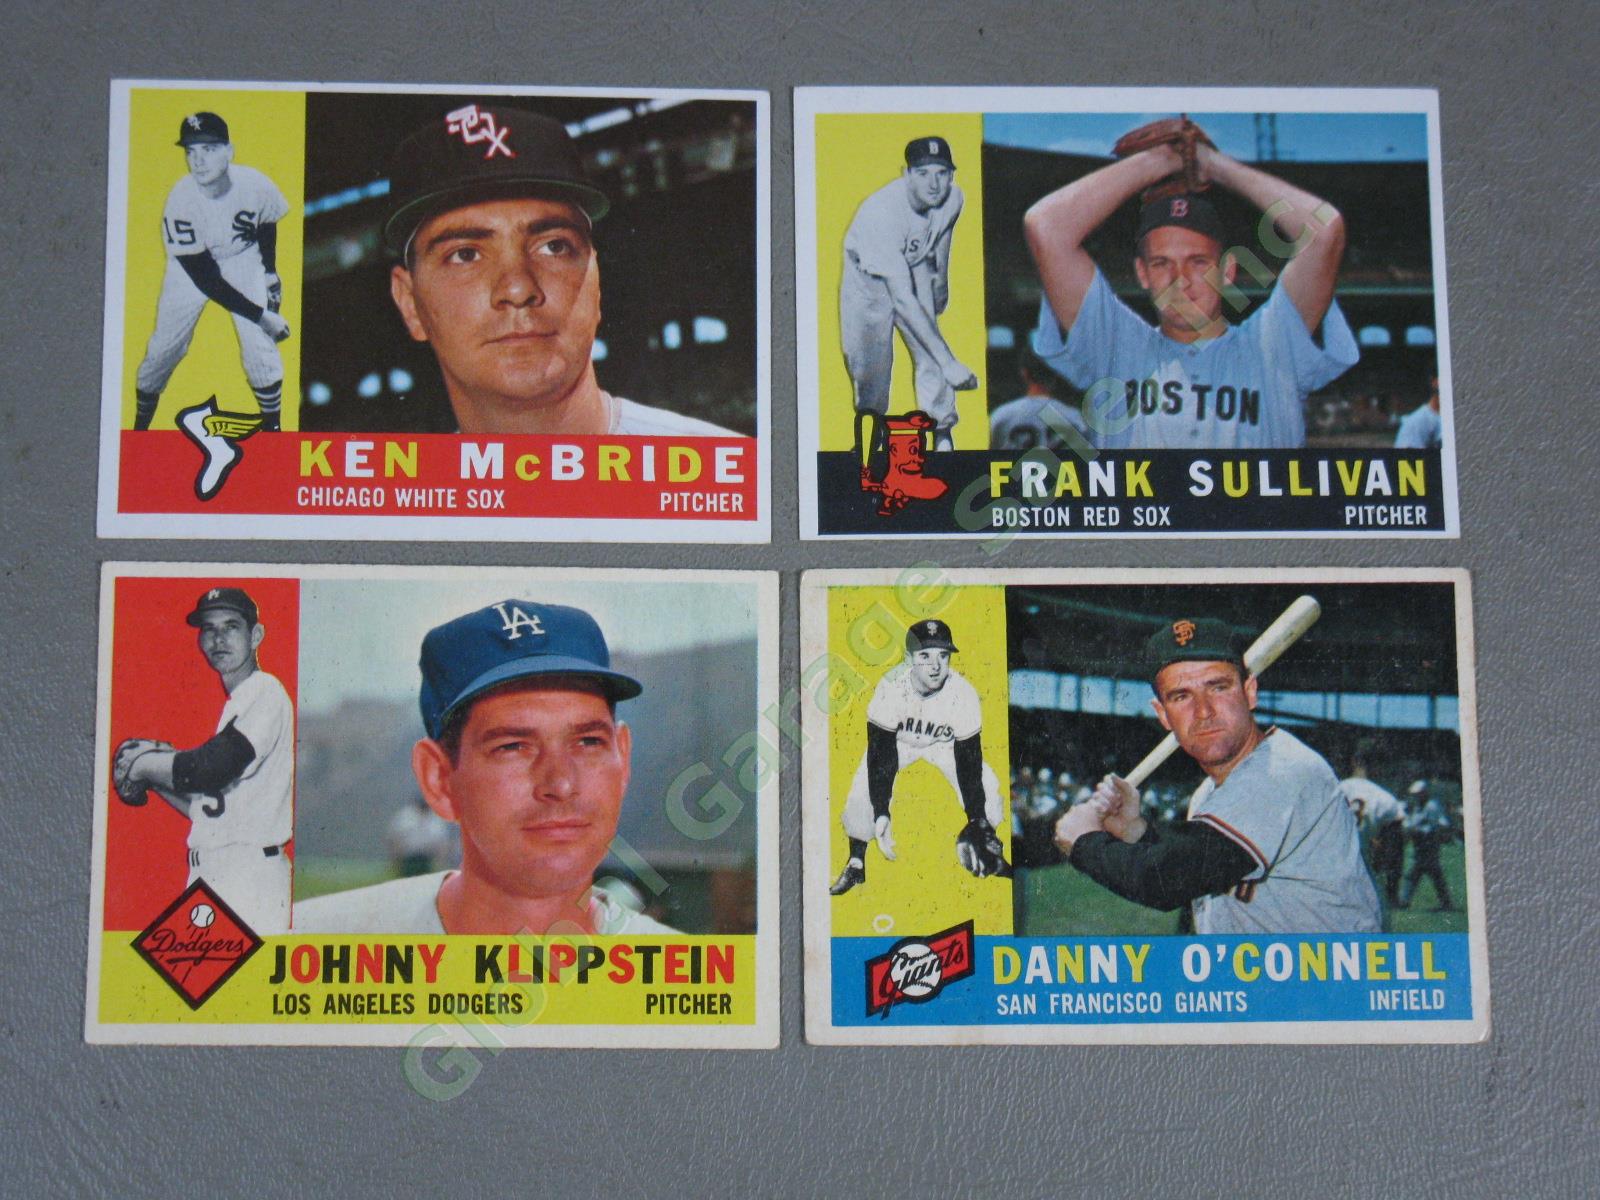 165 VtgTopps 1960 Baseball Card Collection Lot Rookies Teams Senators Braves NR! 6